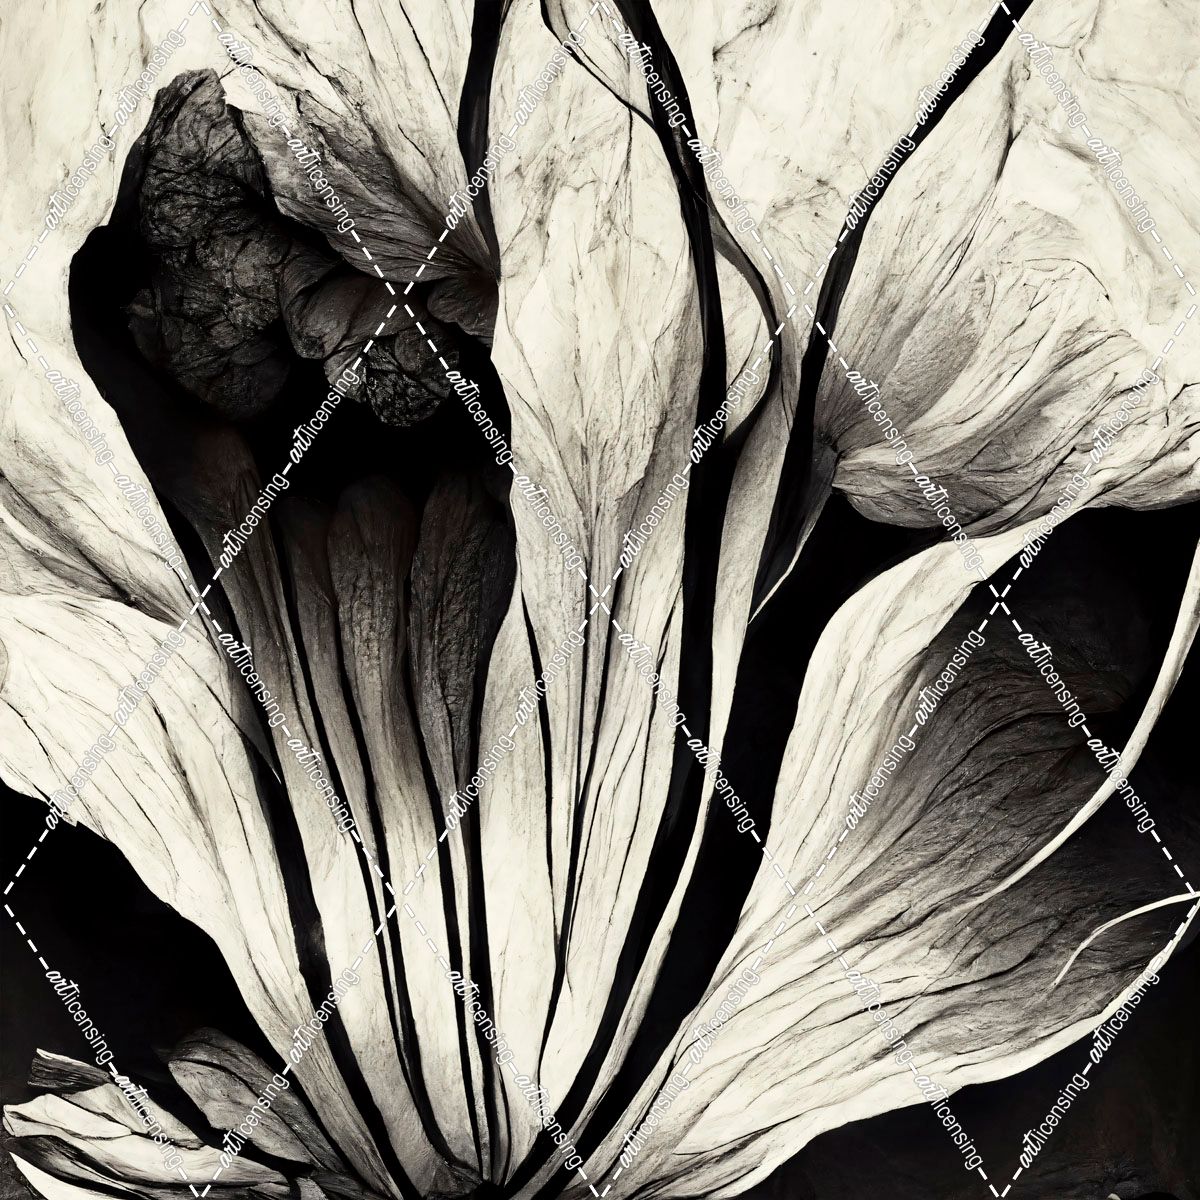 B003 Flowers Black White